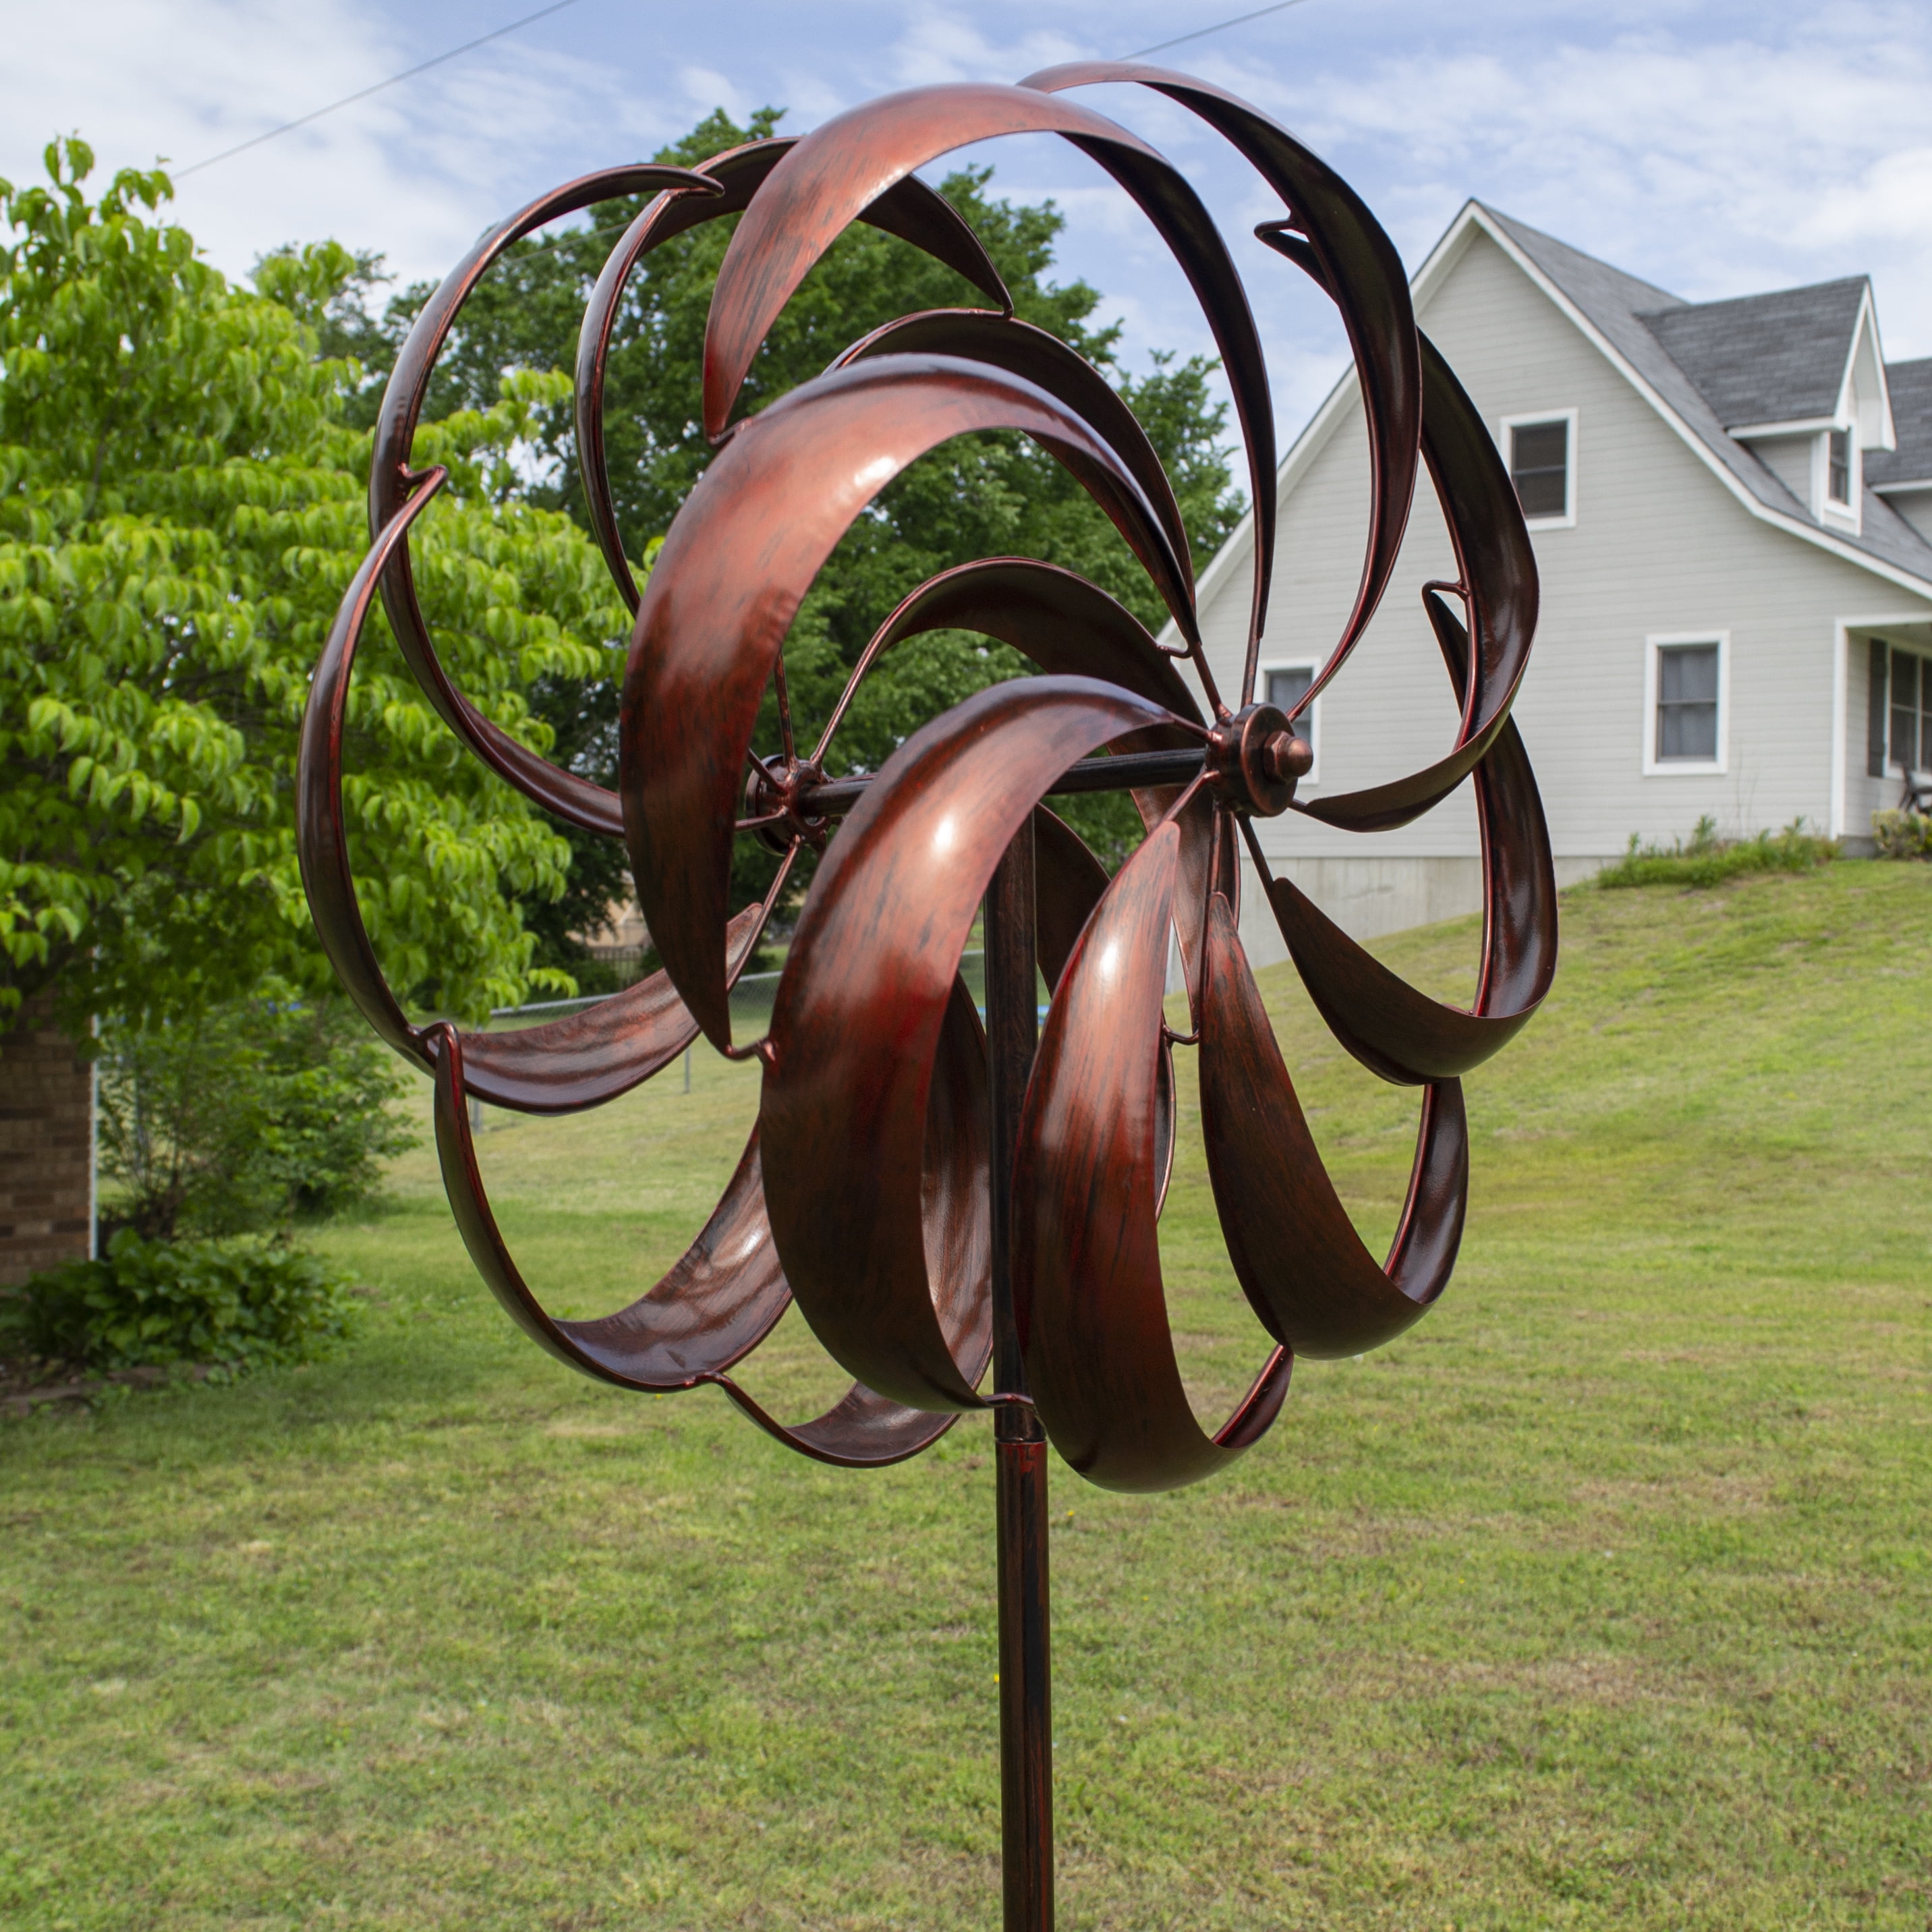 Double Spiral Wind Spinner Solar Light Garden Yard Art Outdoor Lawn Decor Metal 